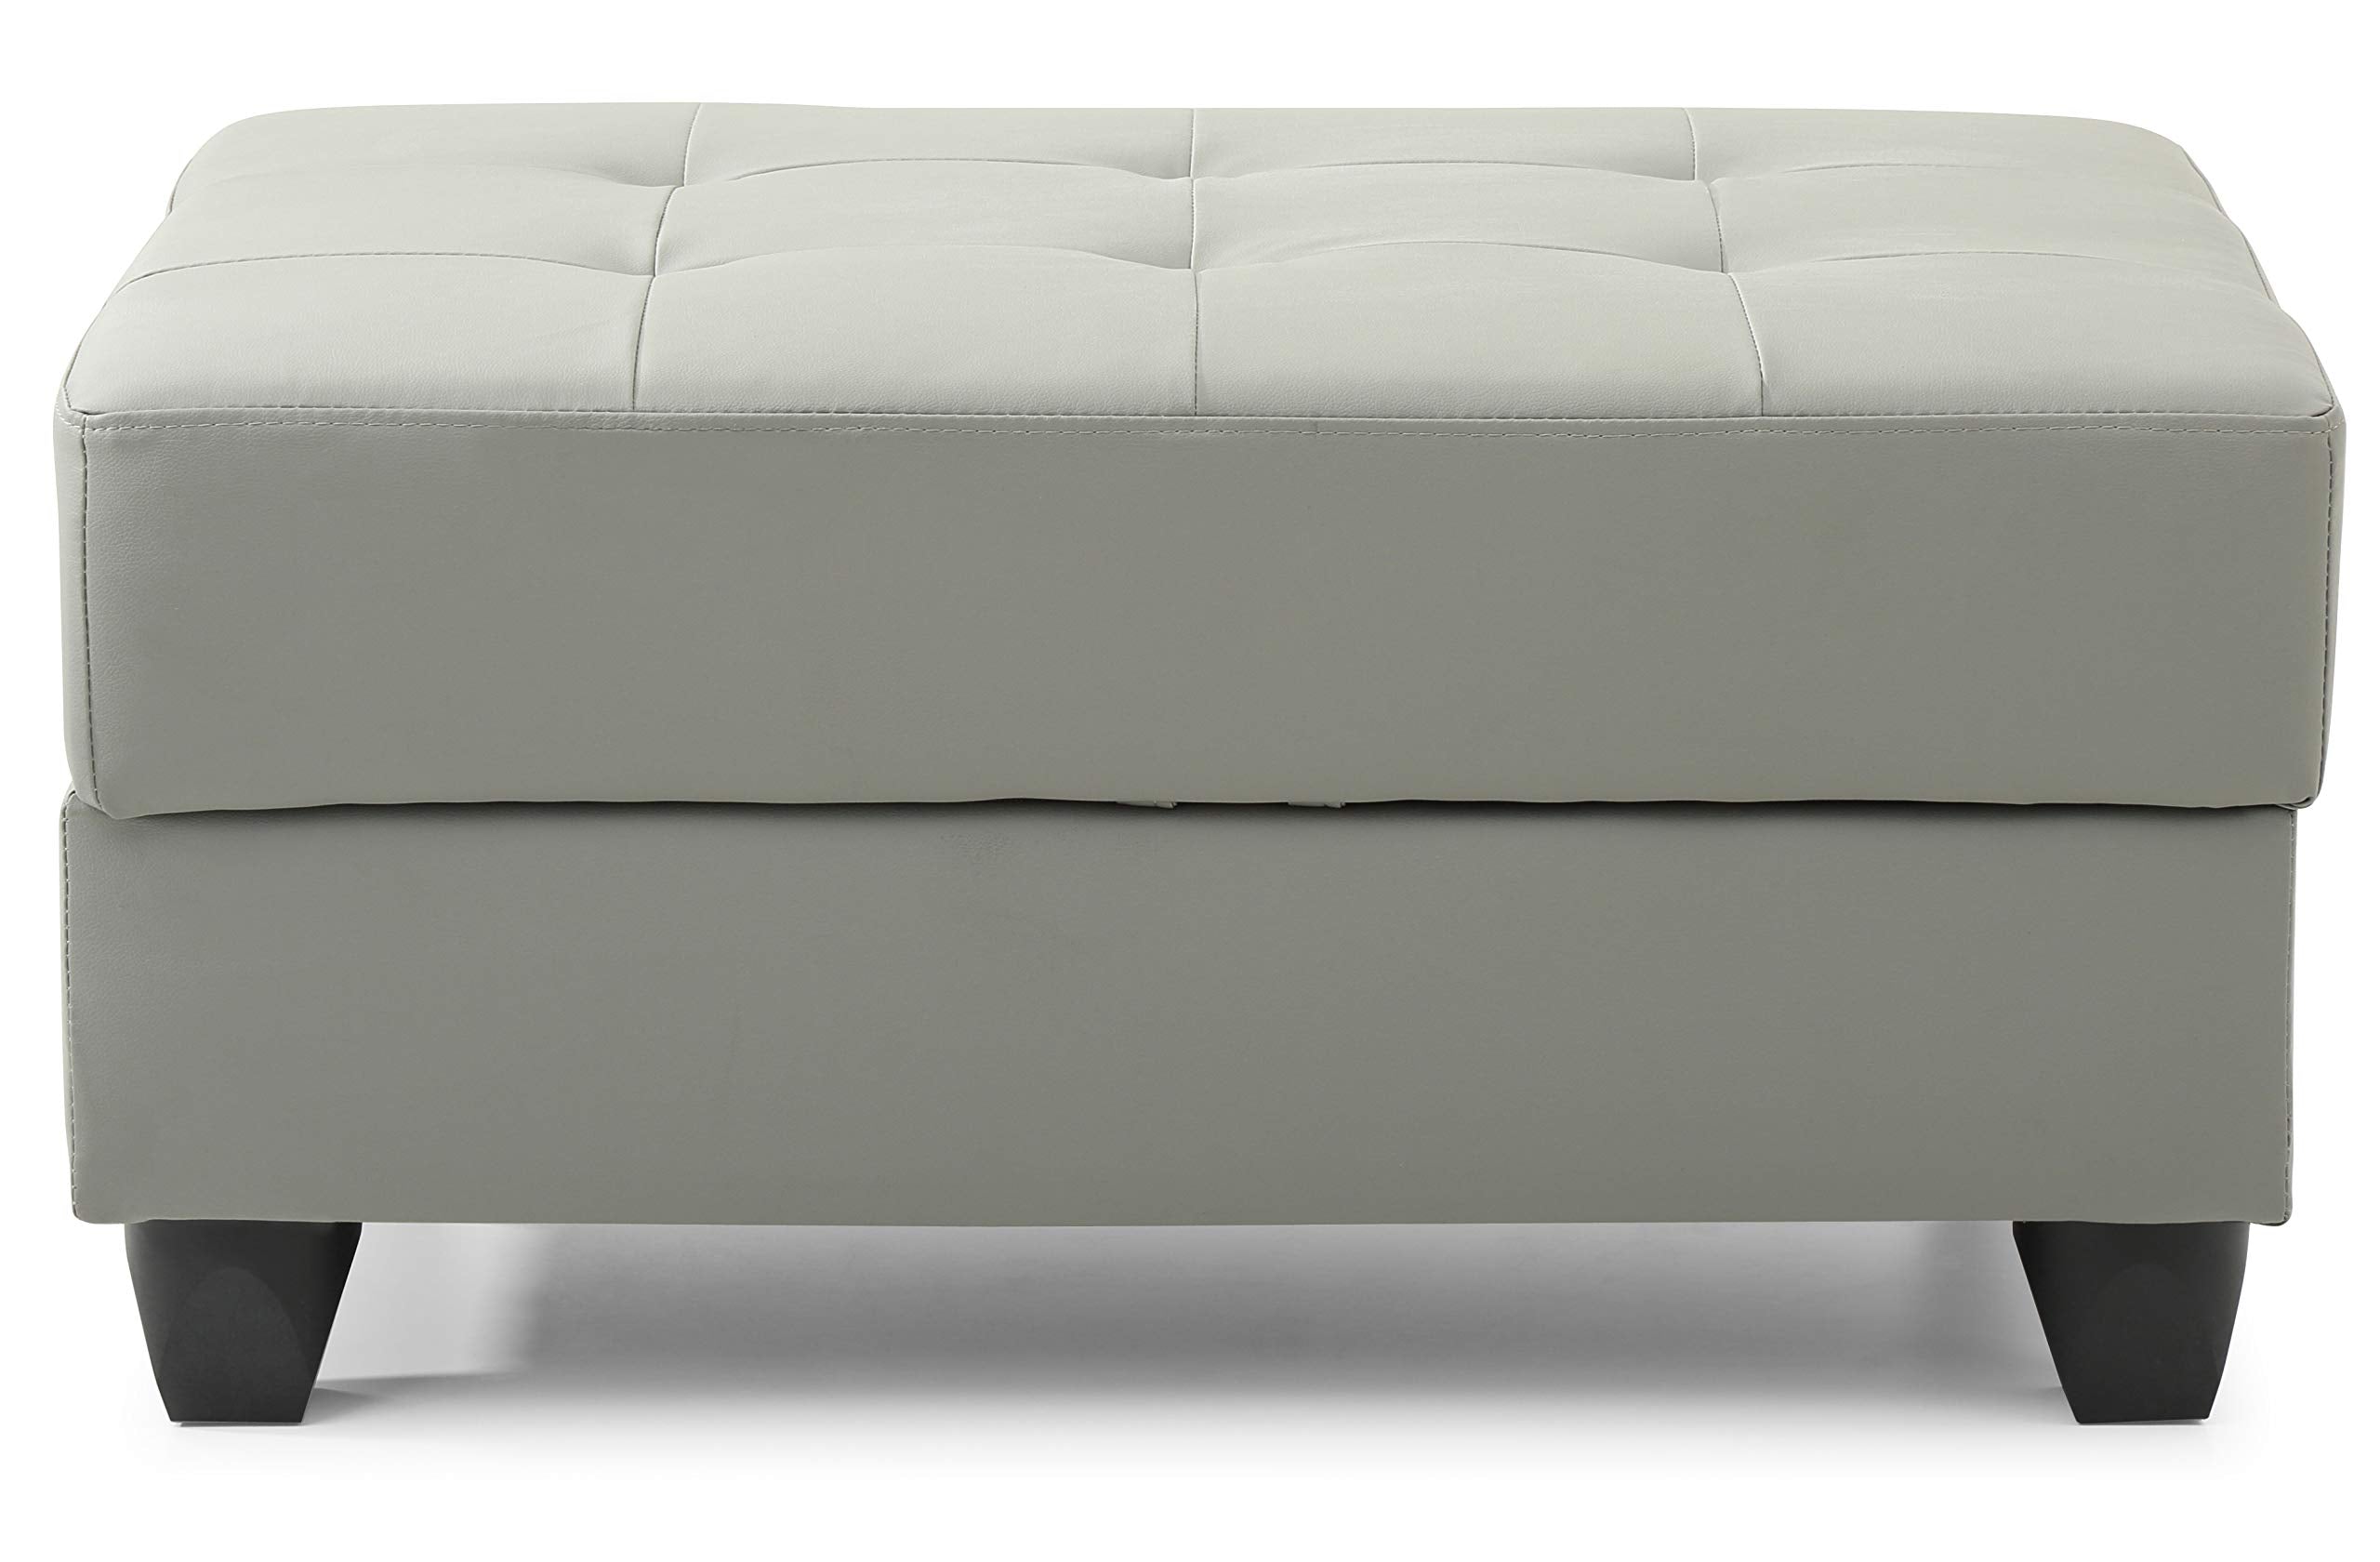 Glory Furniture Nyla Ottoman, Gray. Living Room Furniture 18" H x 37" W x 26" D